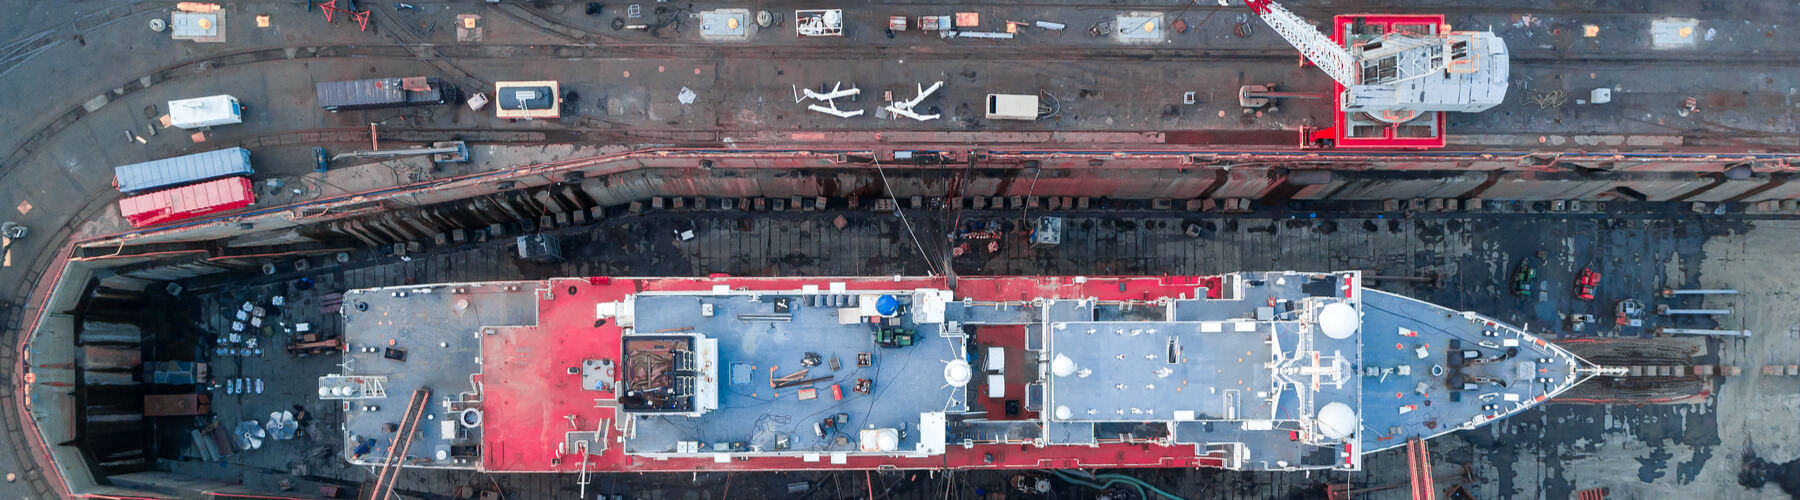 Aerial view of a shipyard repairing a large ship